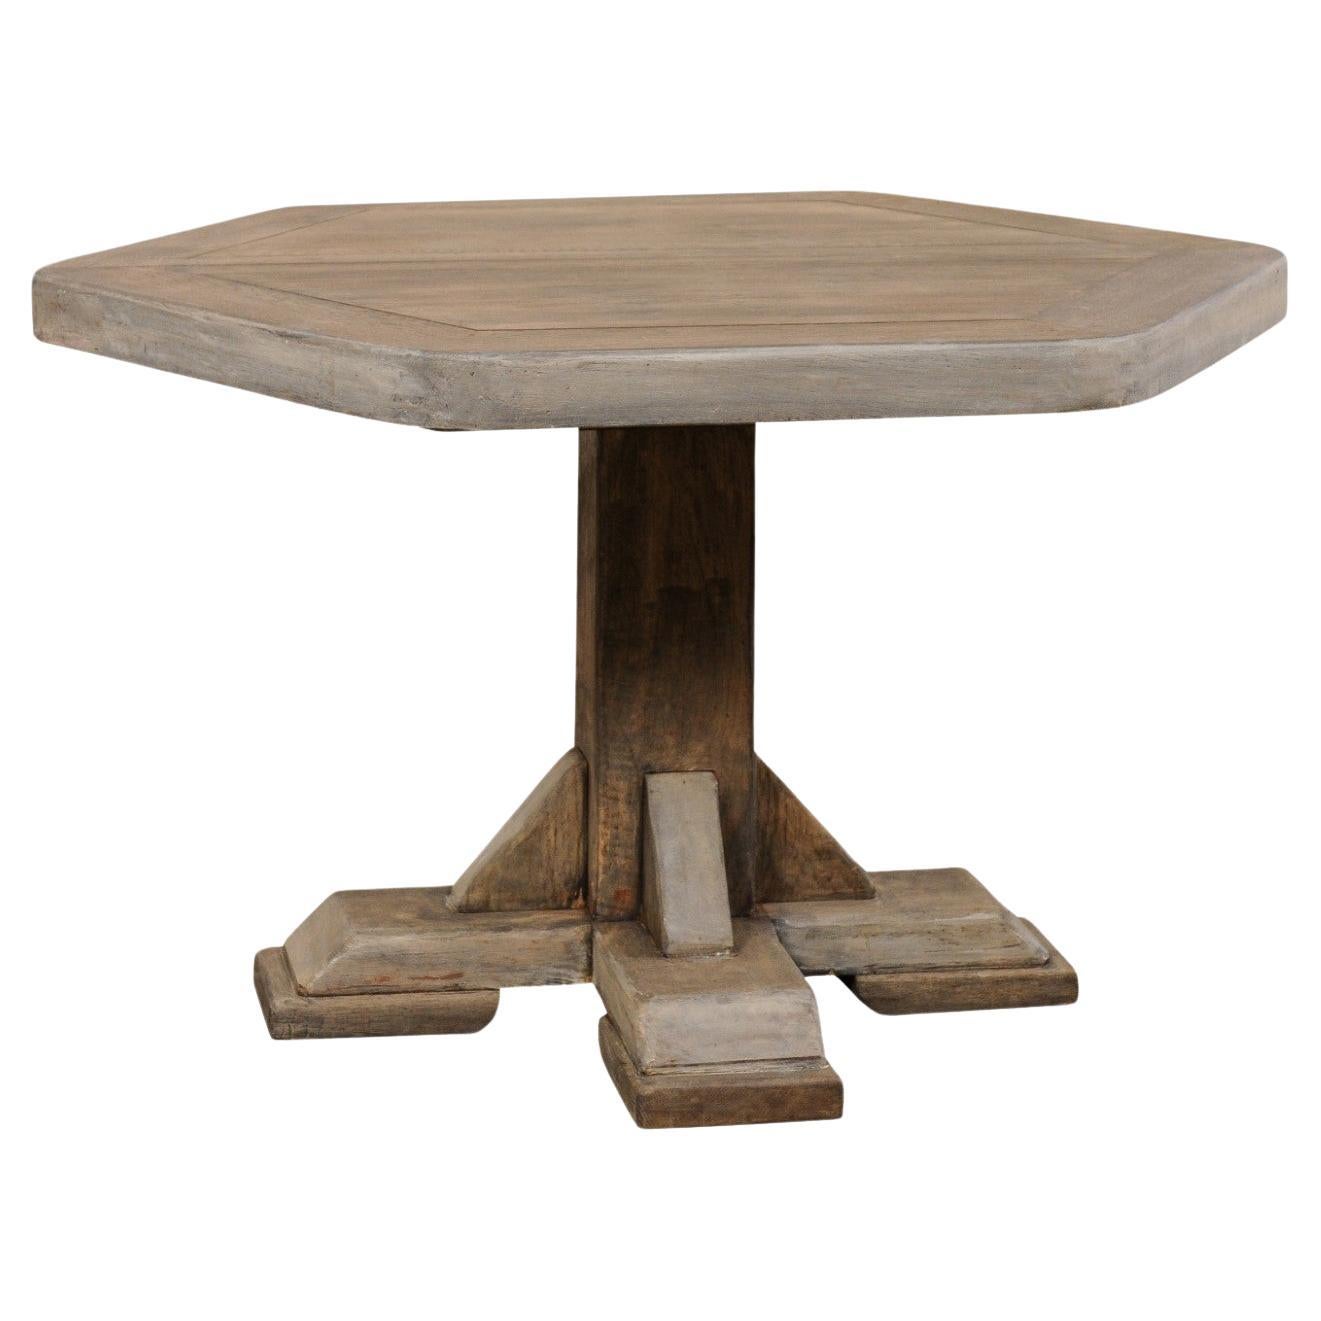 European Hexagon-Shaped Wooden Pedestal Table, Mid 20th century